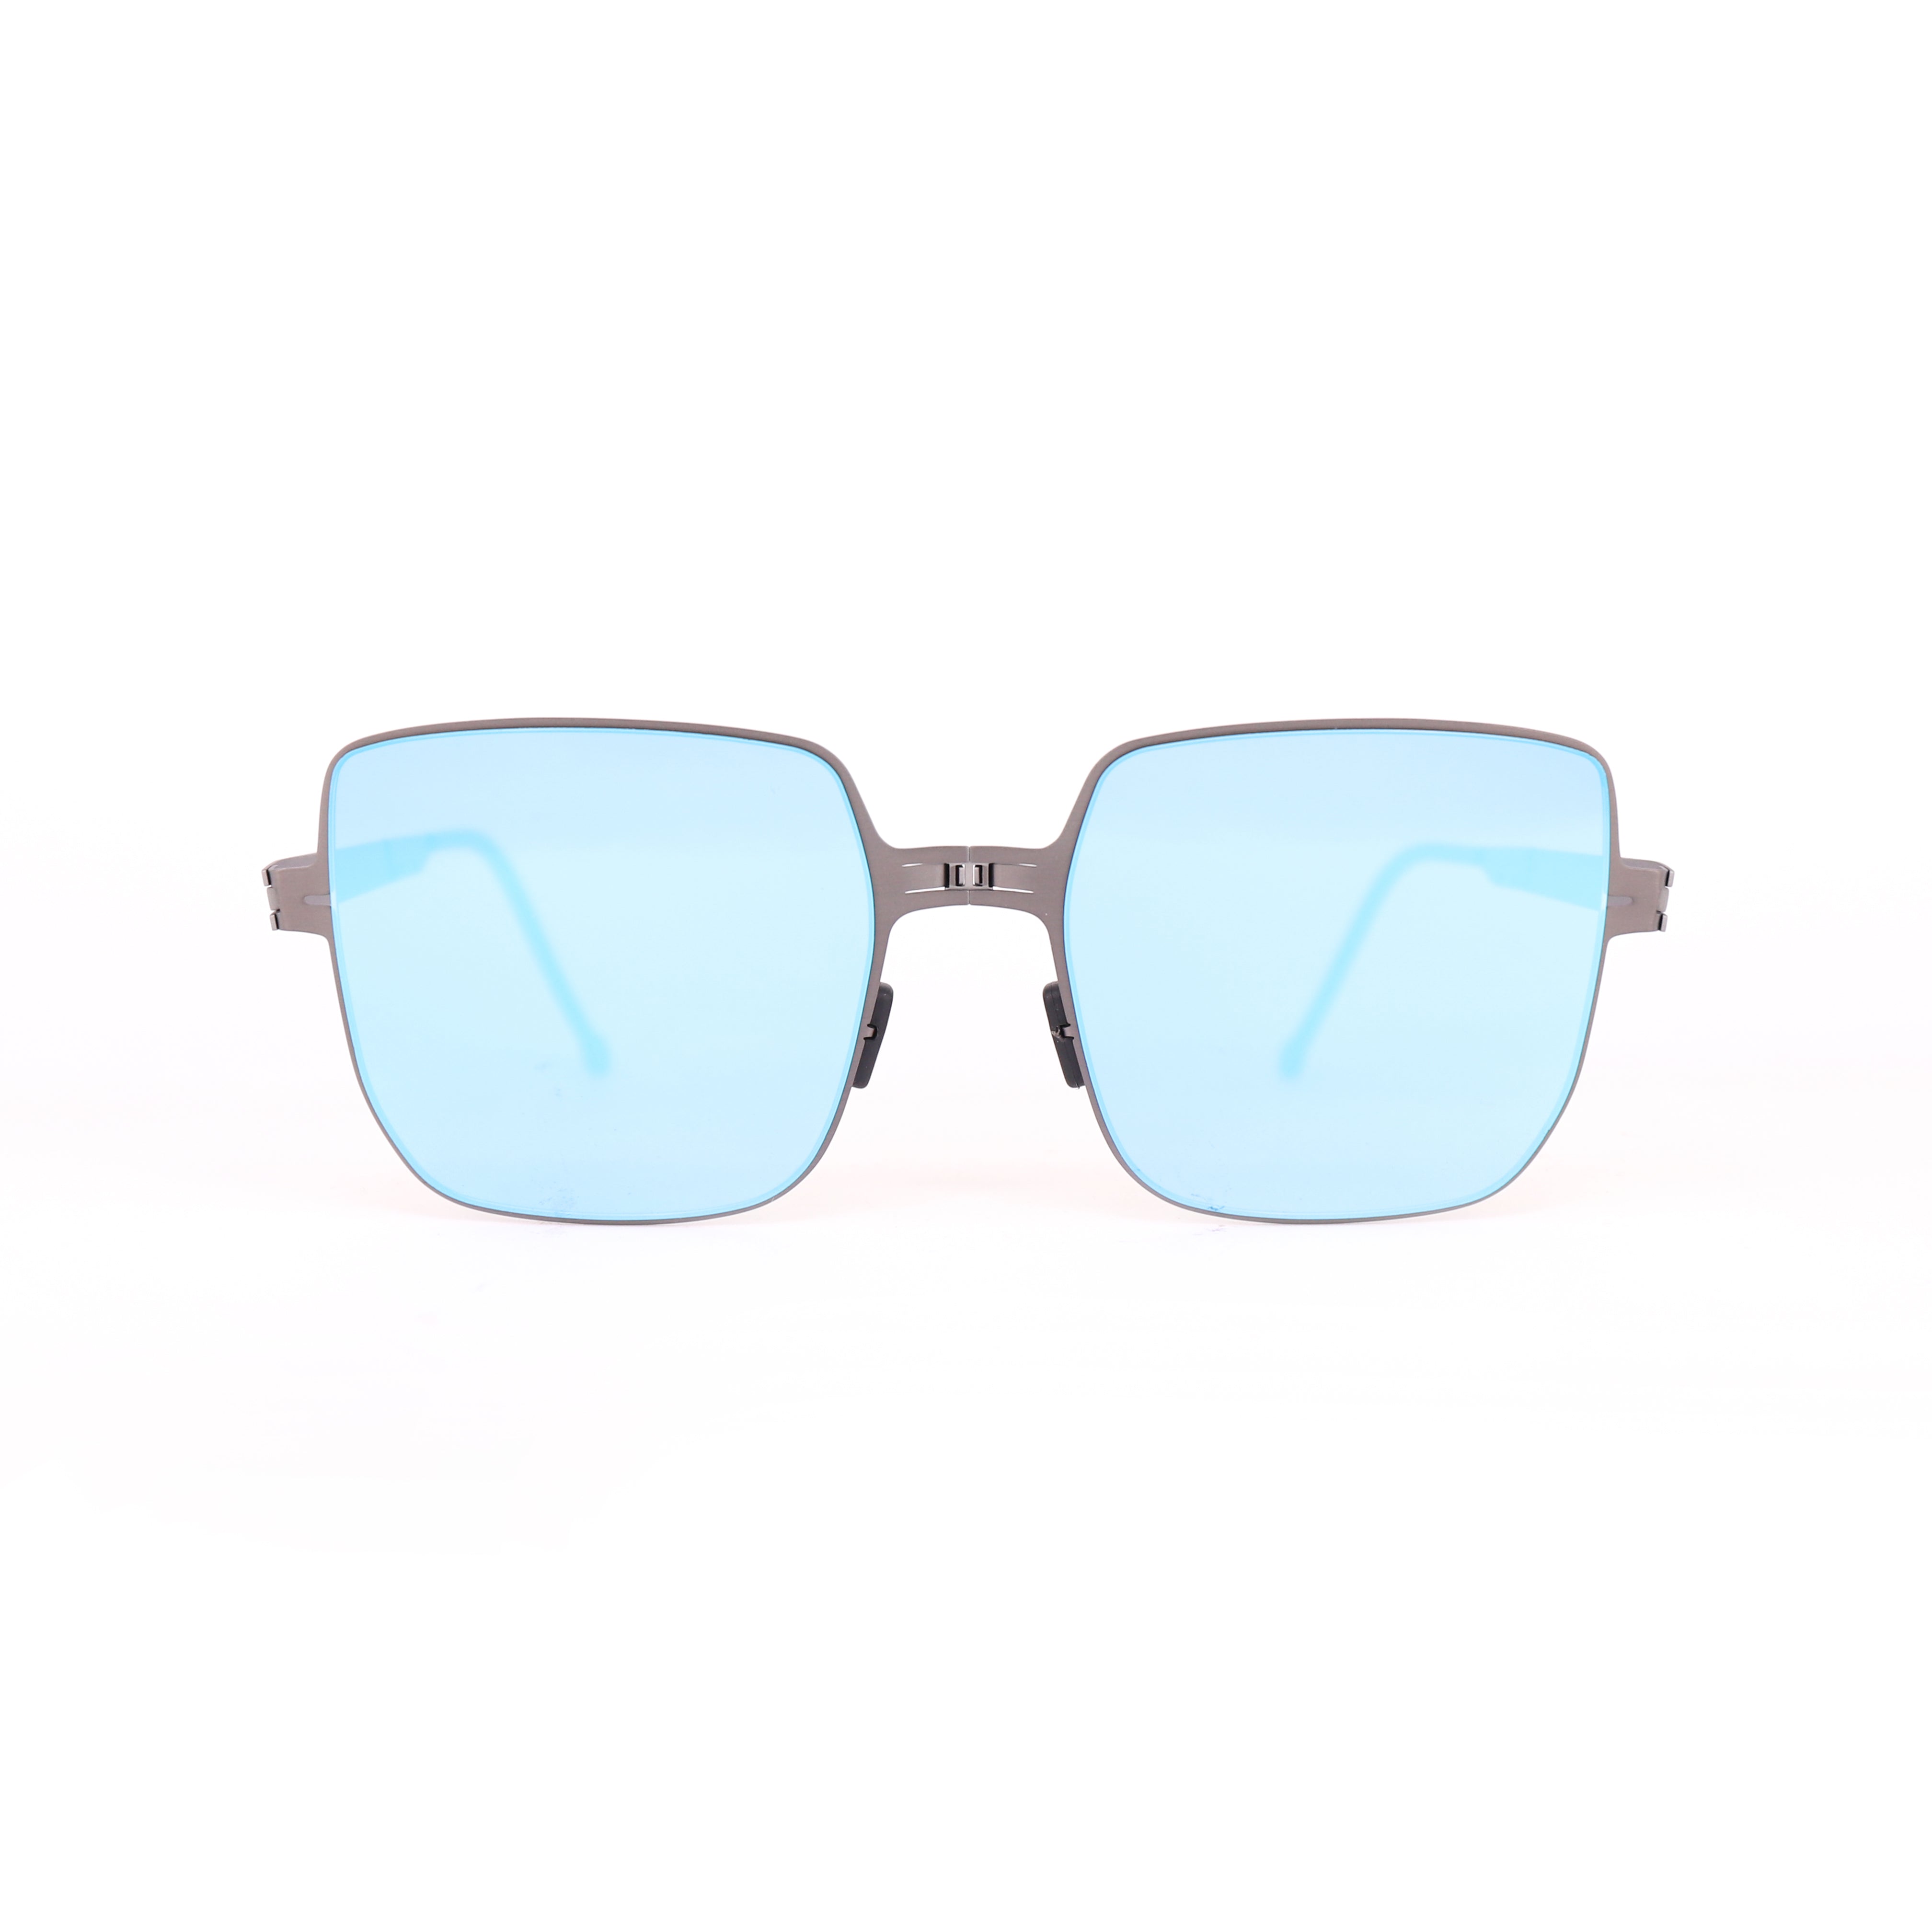 BRIGITTE Steel | Light-Blue - ROAV Eyewear | Official Retailer